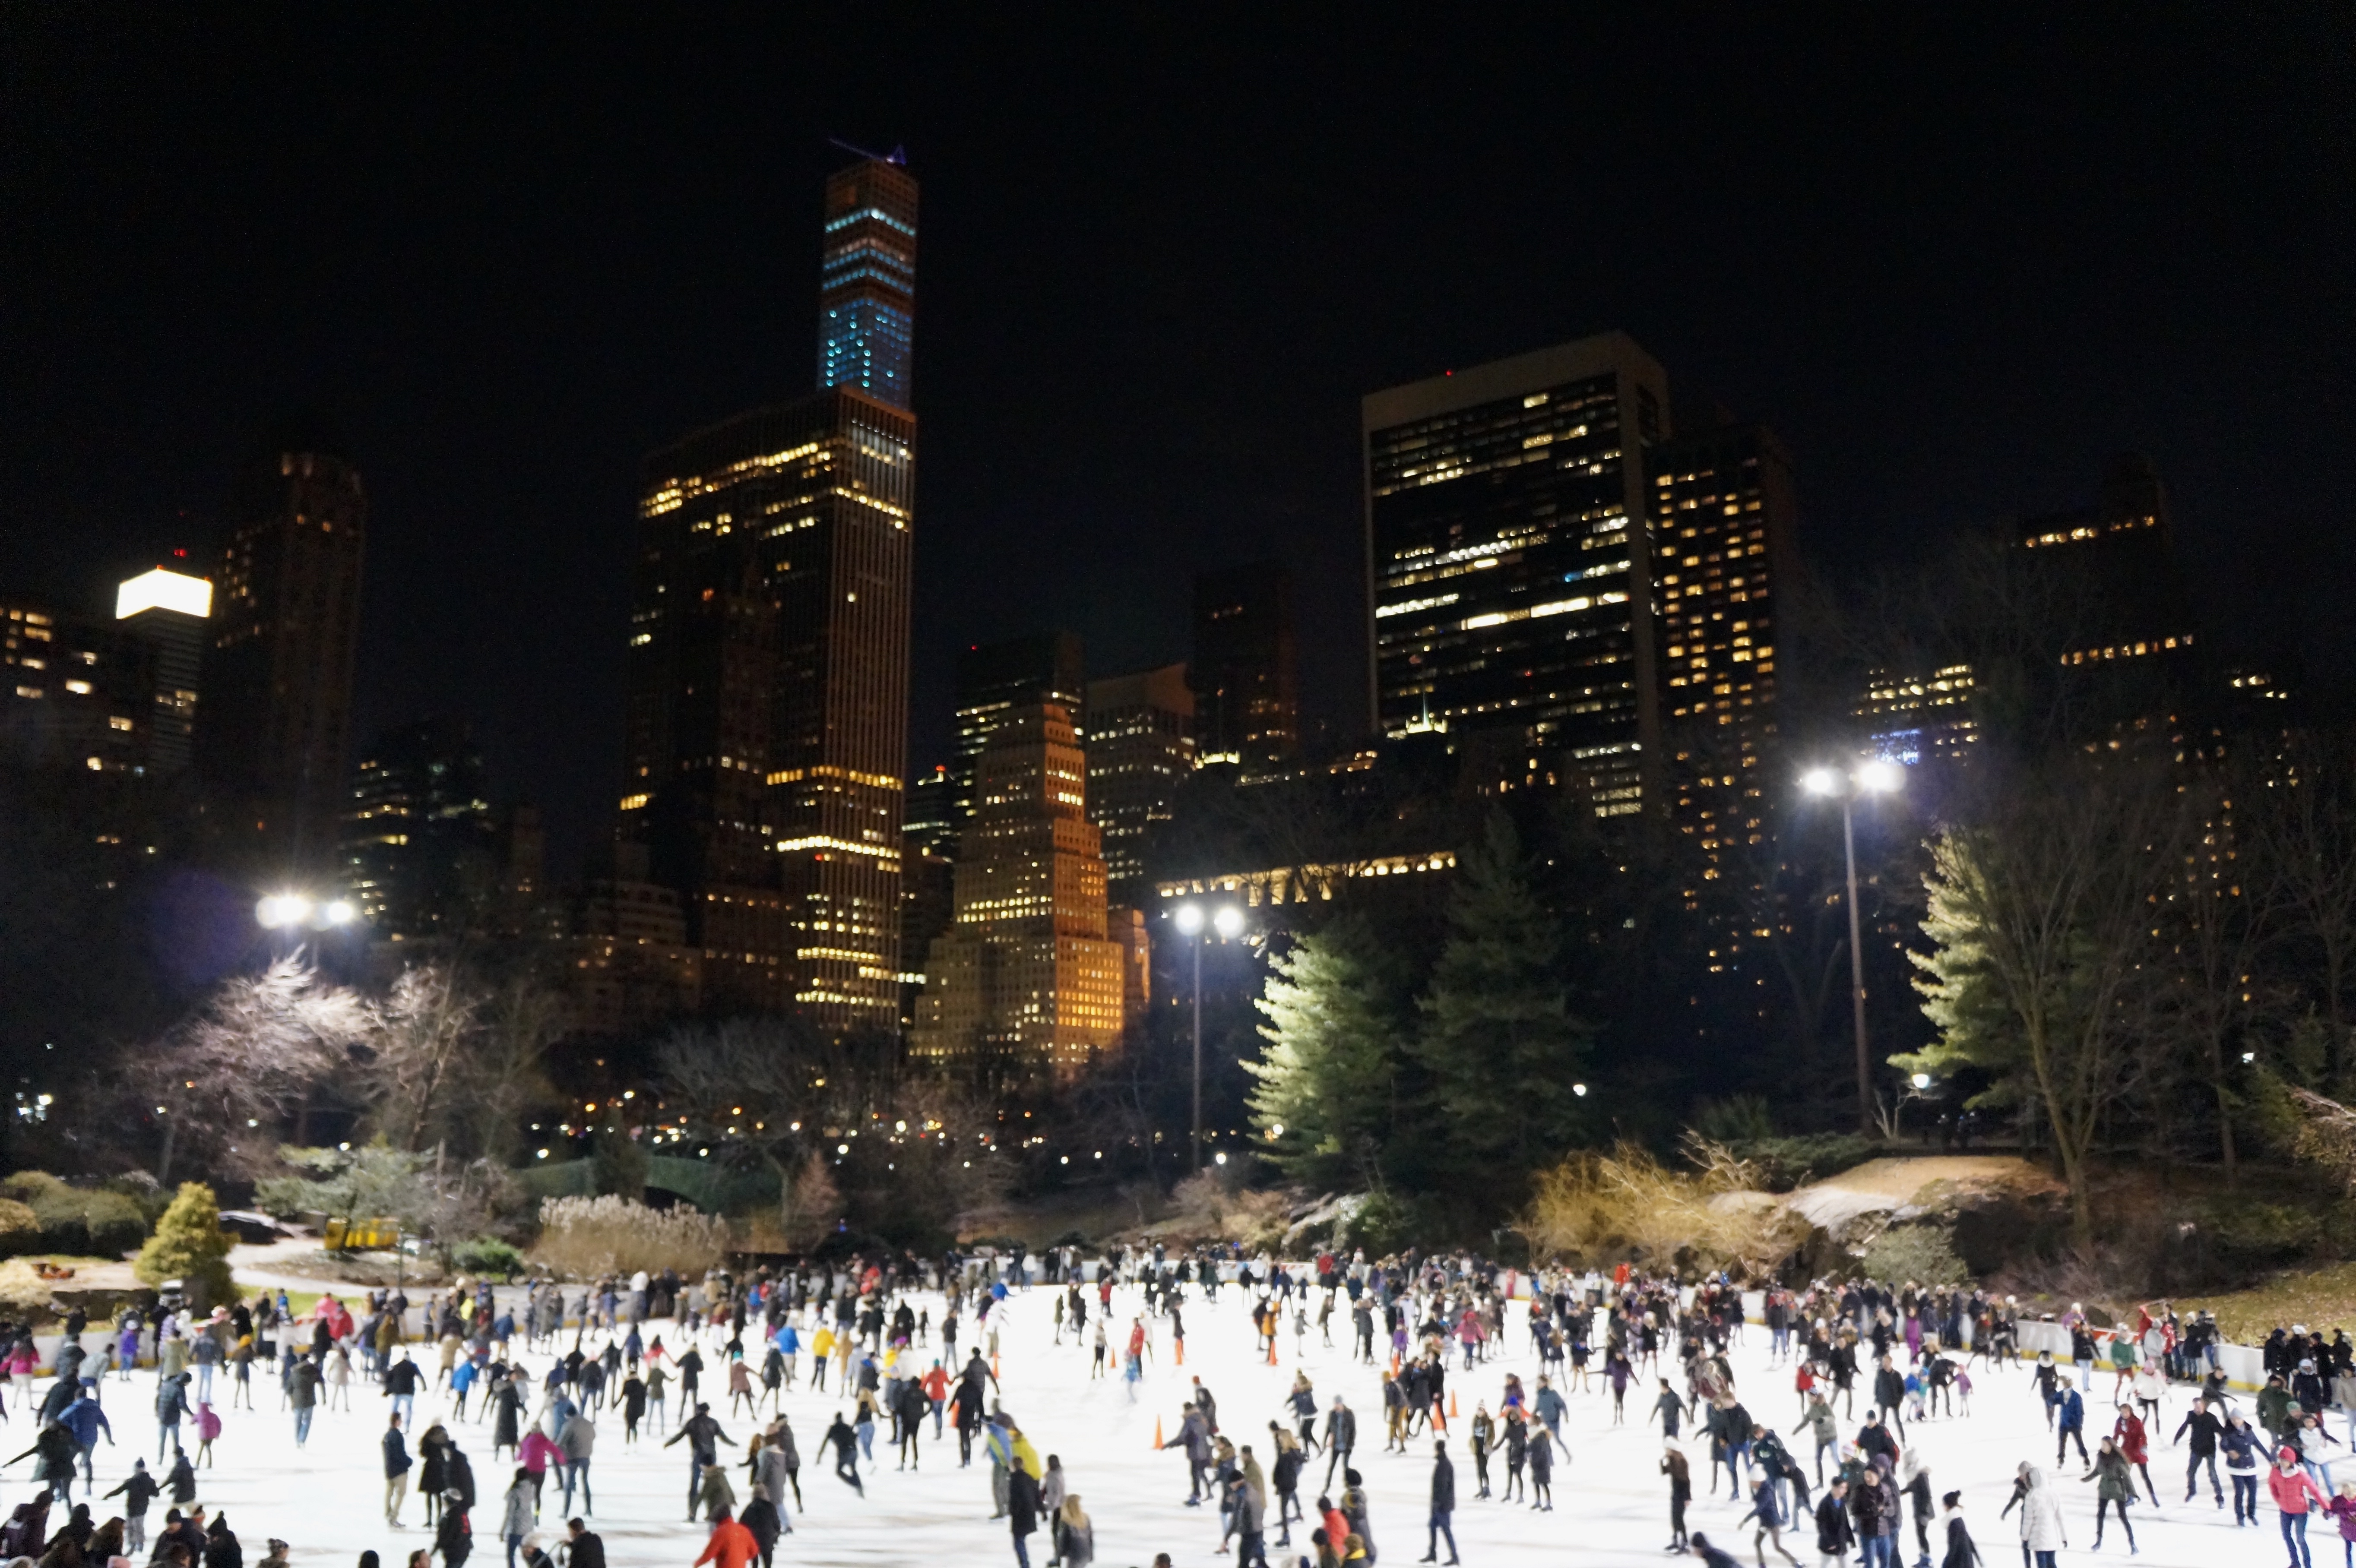 Skating rink in Central Park